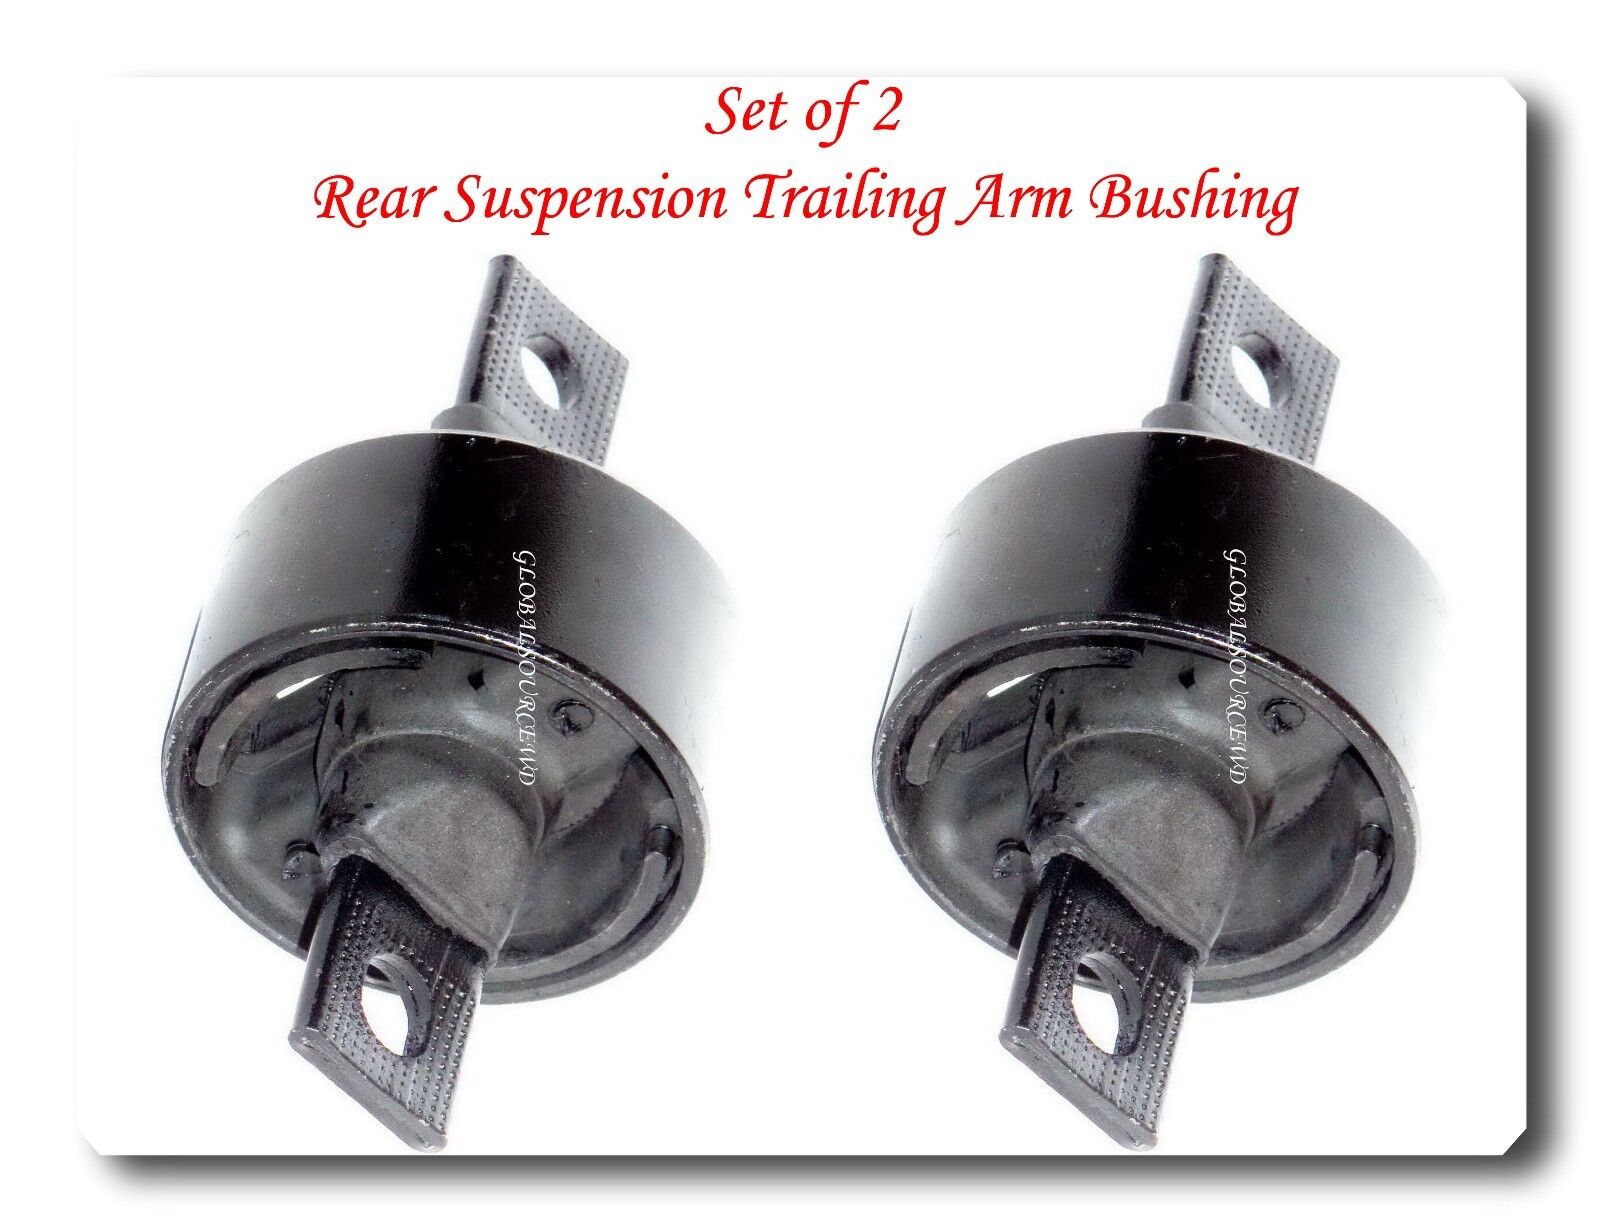 Set 2 Rear Suspension Trailing Arm Bushing Fits: INTEGRA CIVIC DEL SOL CR-V CRX 